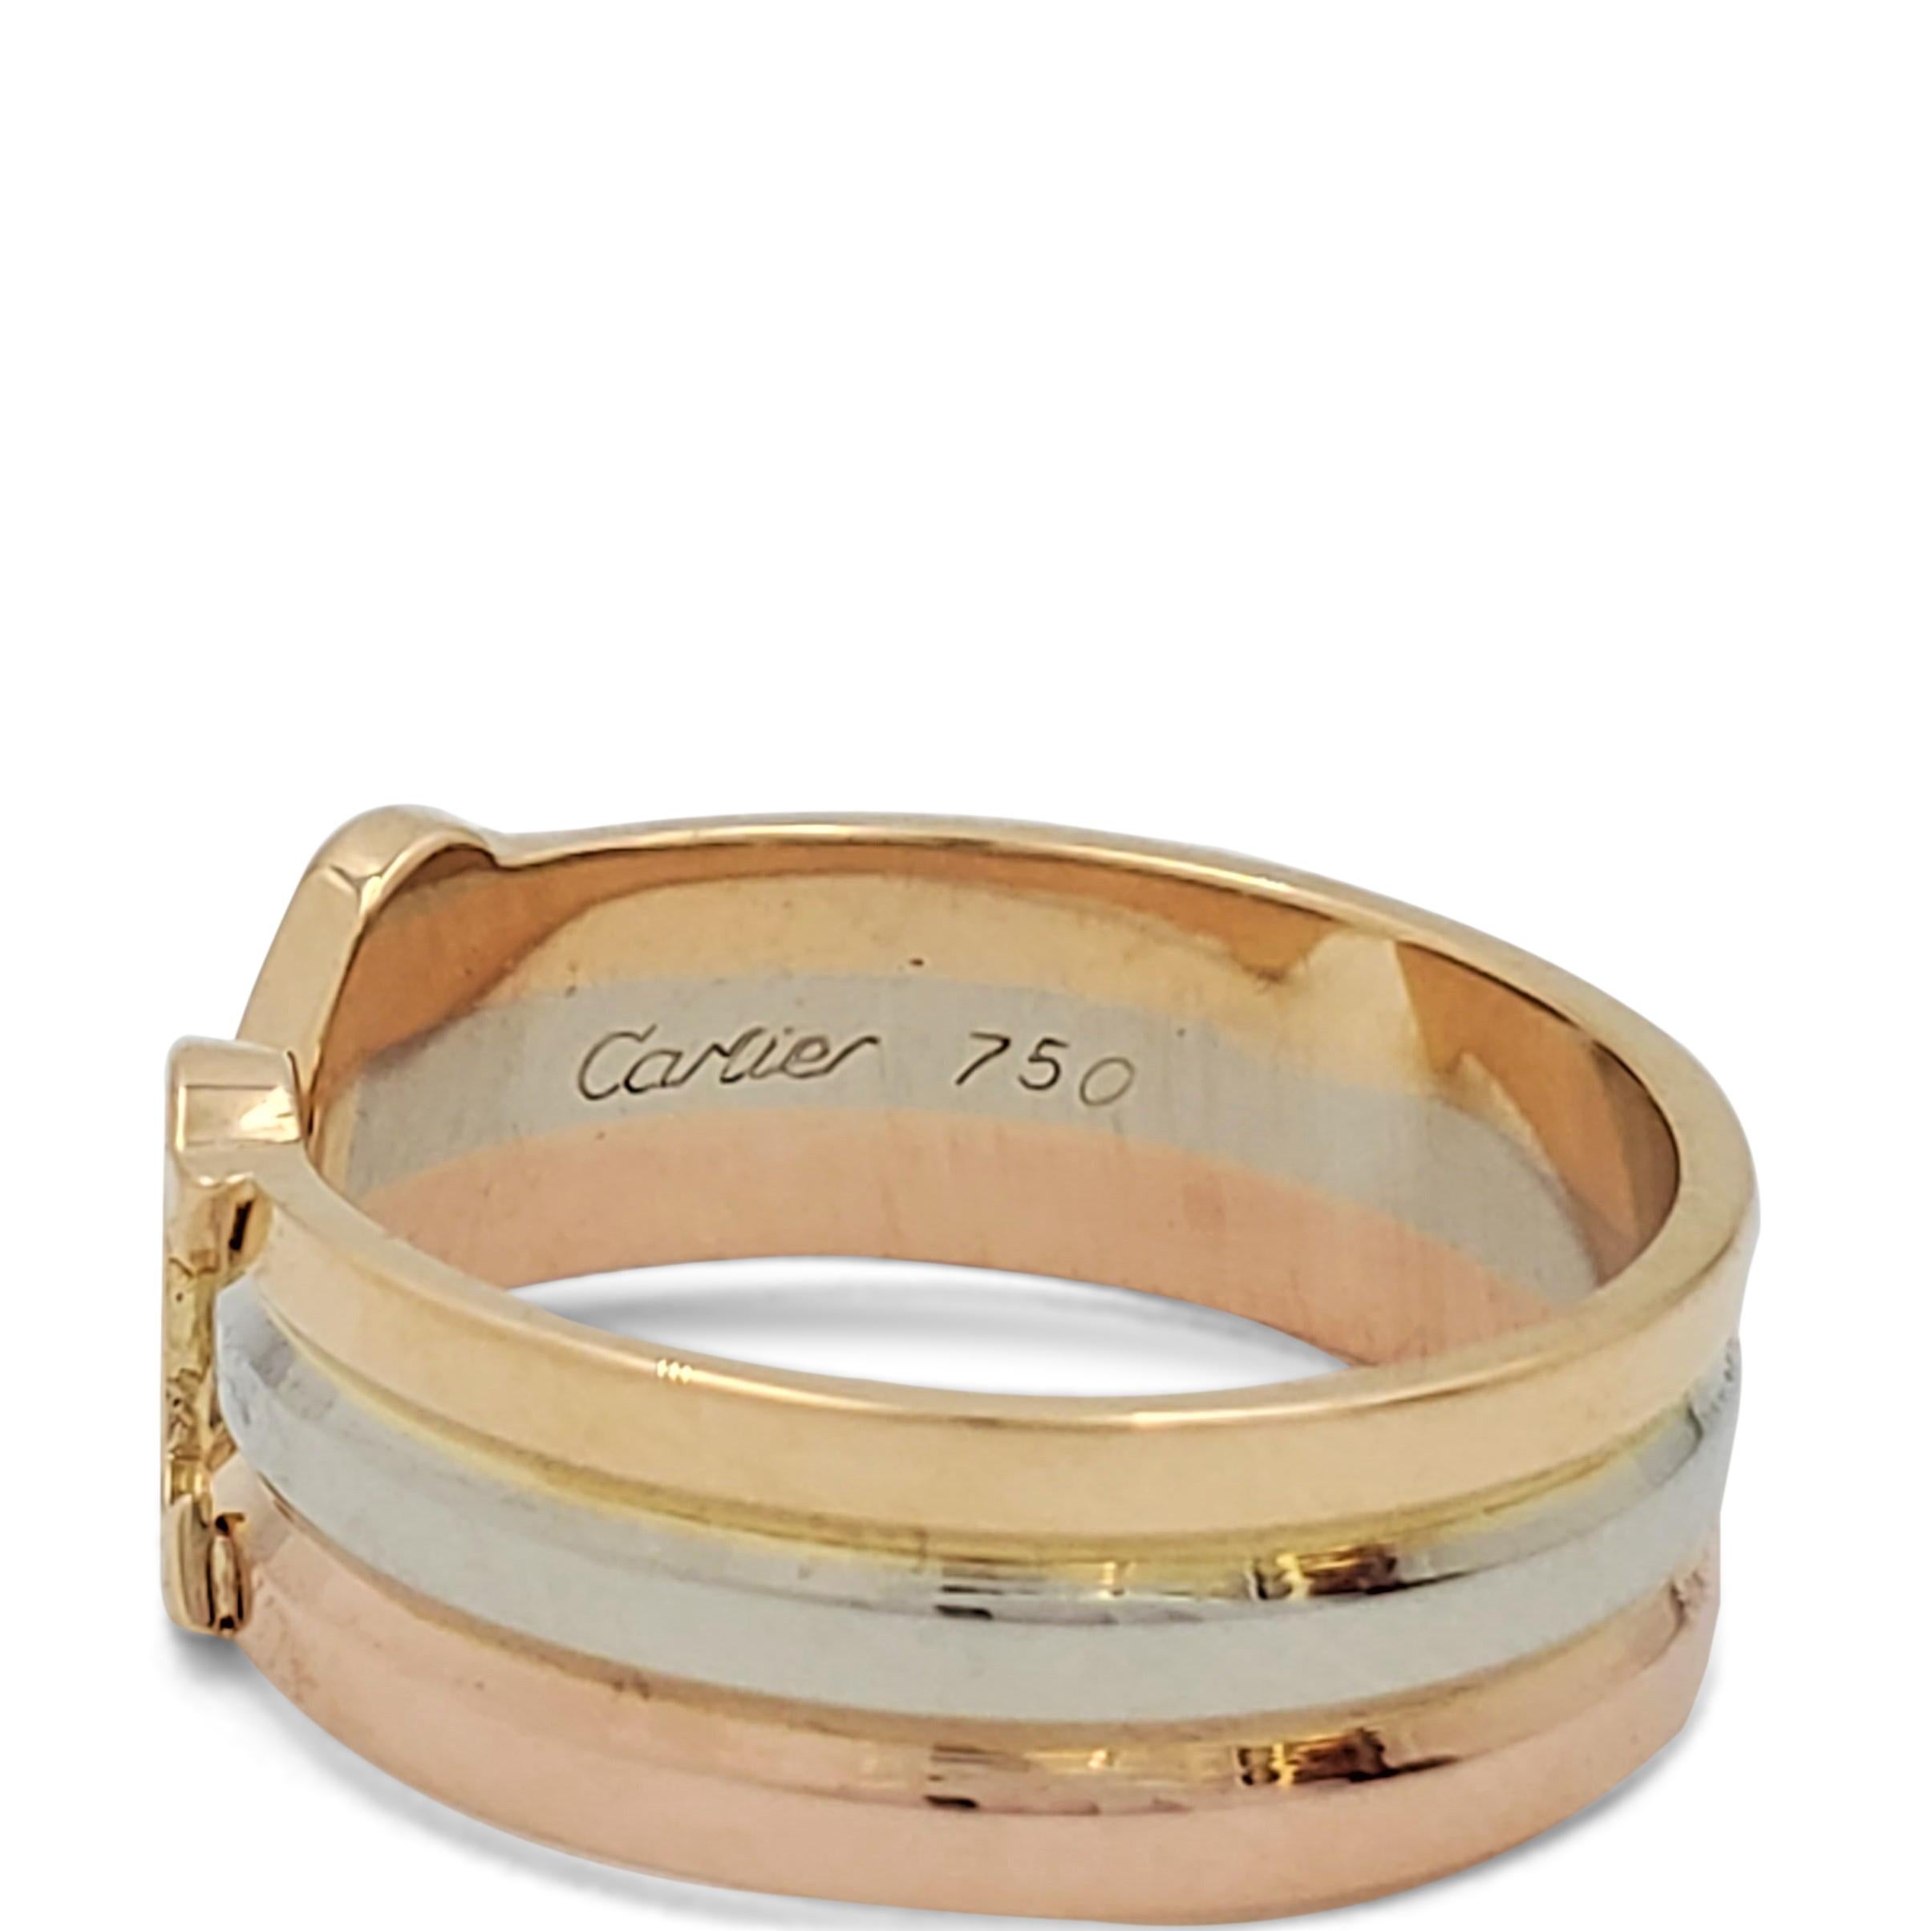 Cartier 'C De Cartier' Tri-Colored Gold Ring 2